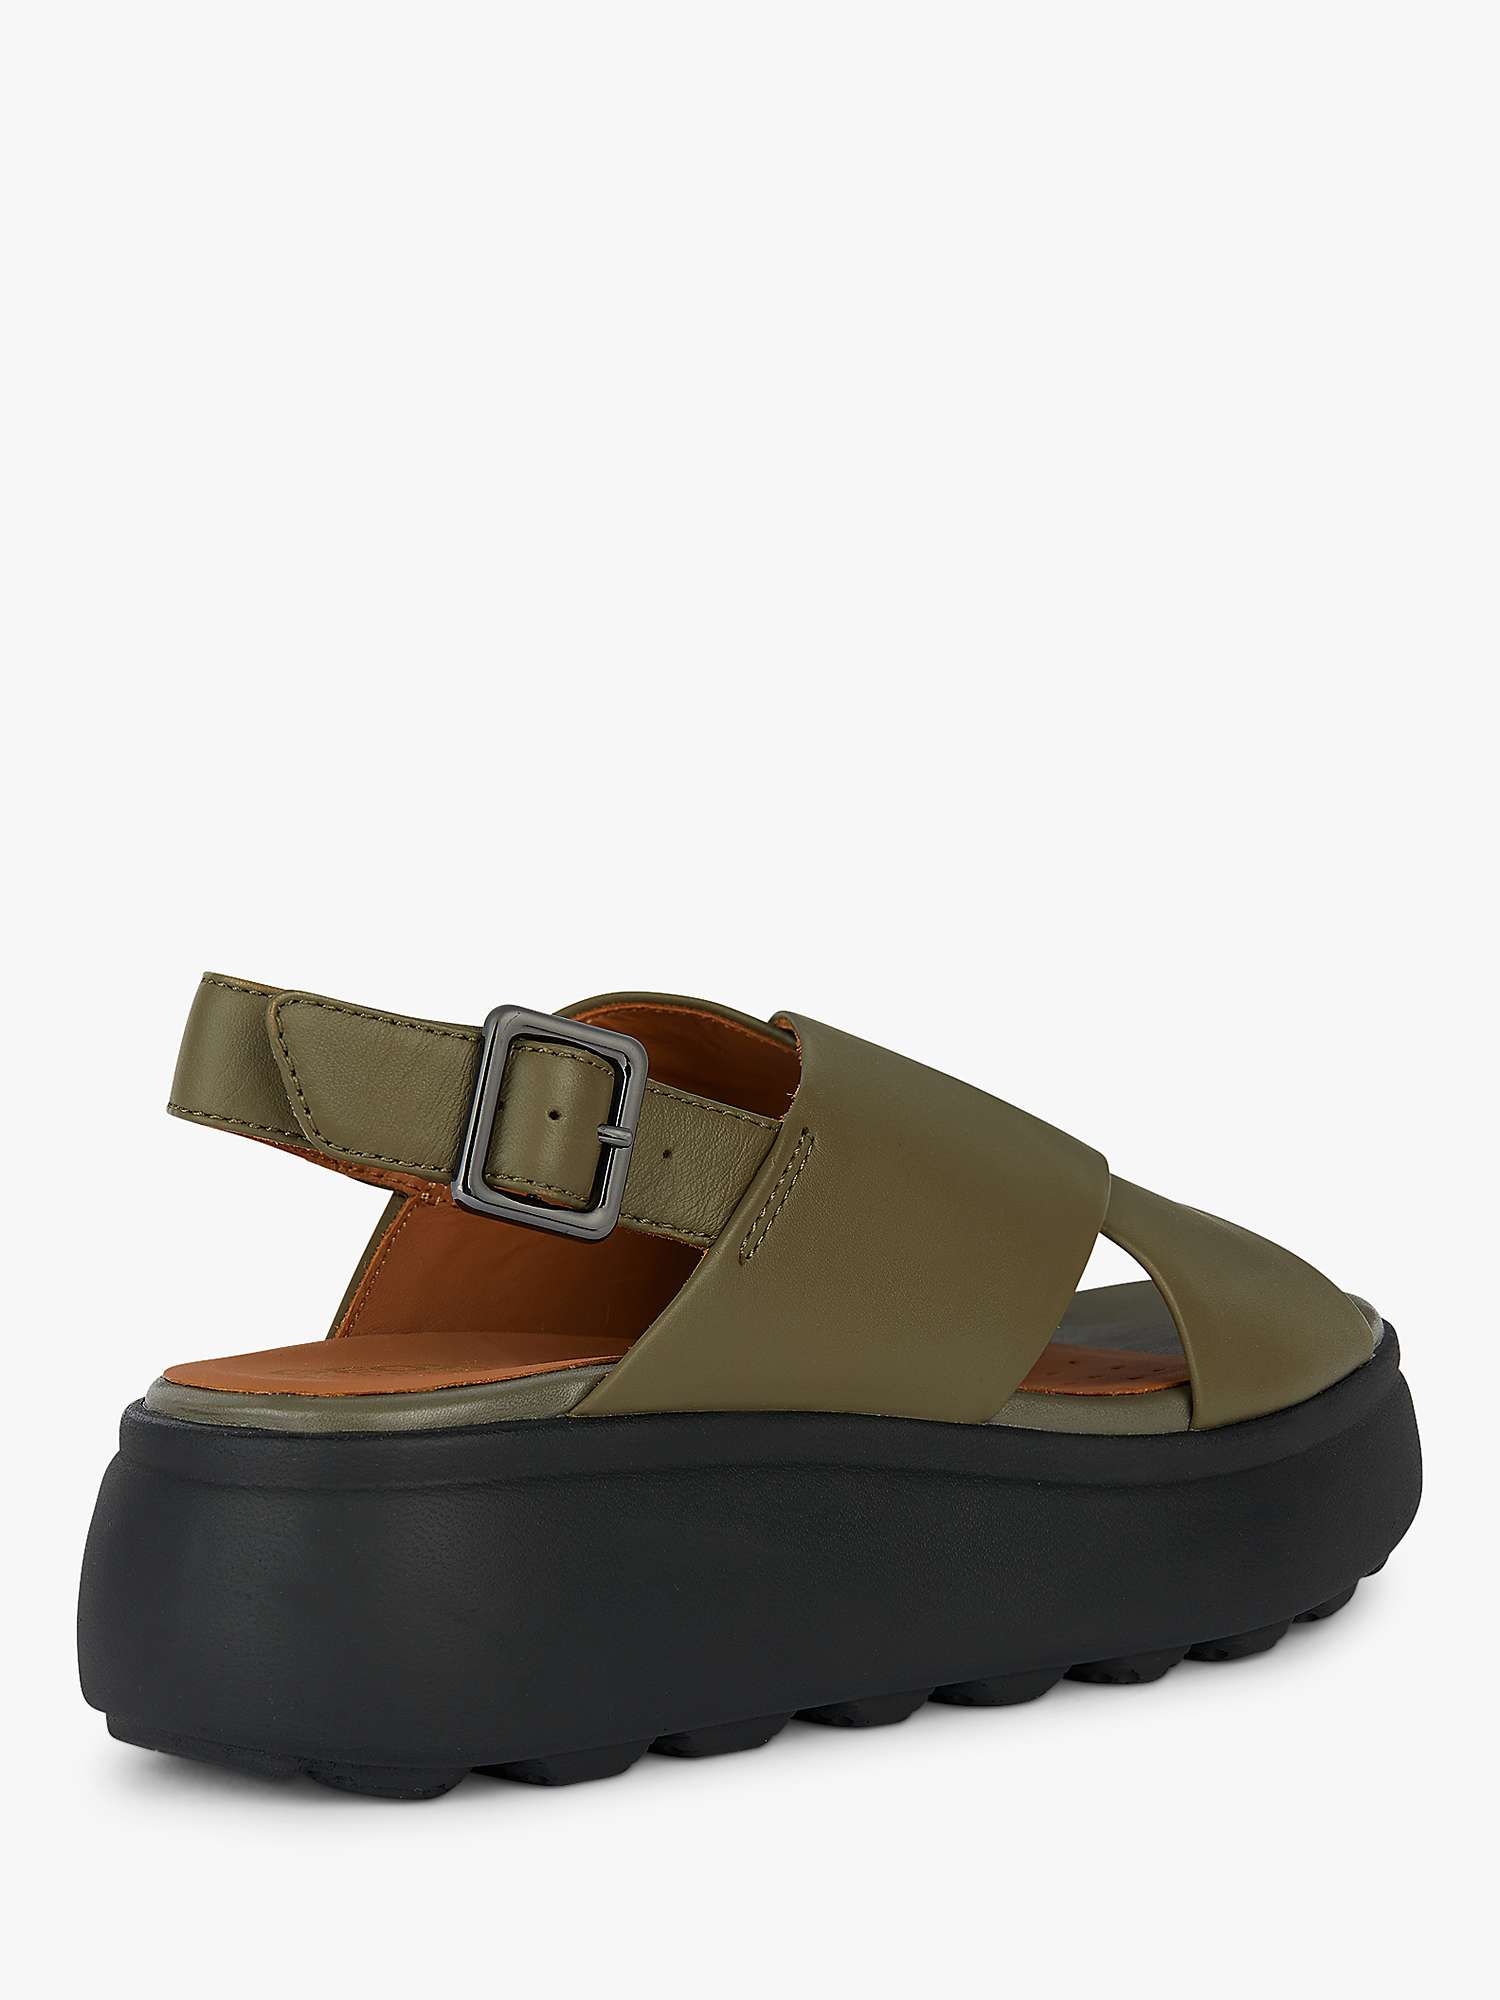 Buy Geox Spherica Leather Sandals, Sage Online at johnlewis.com